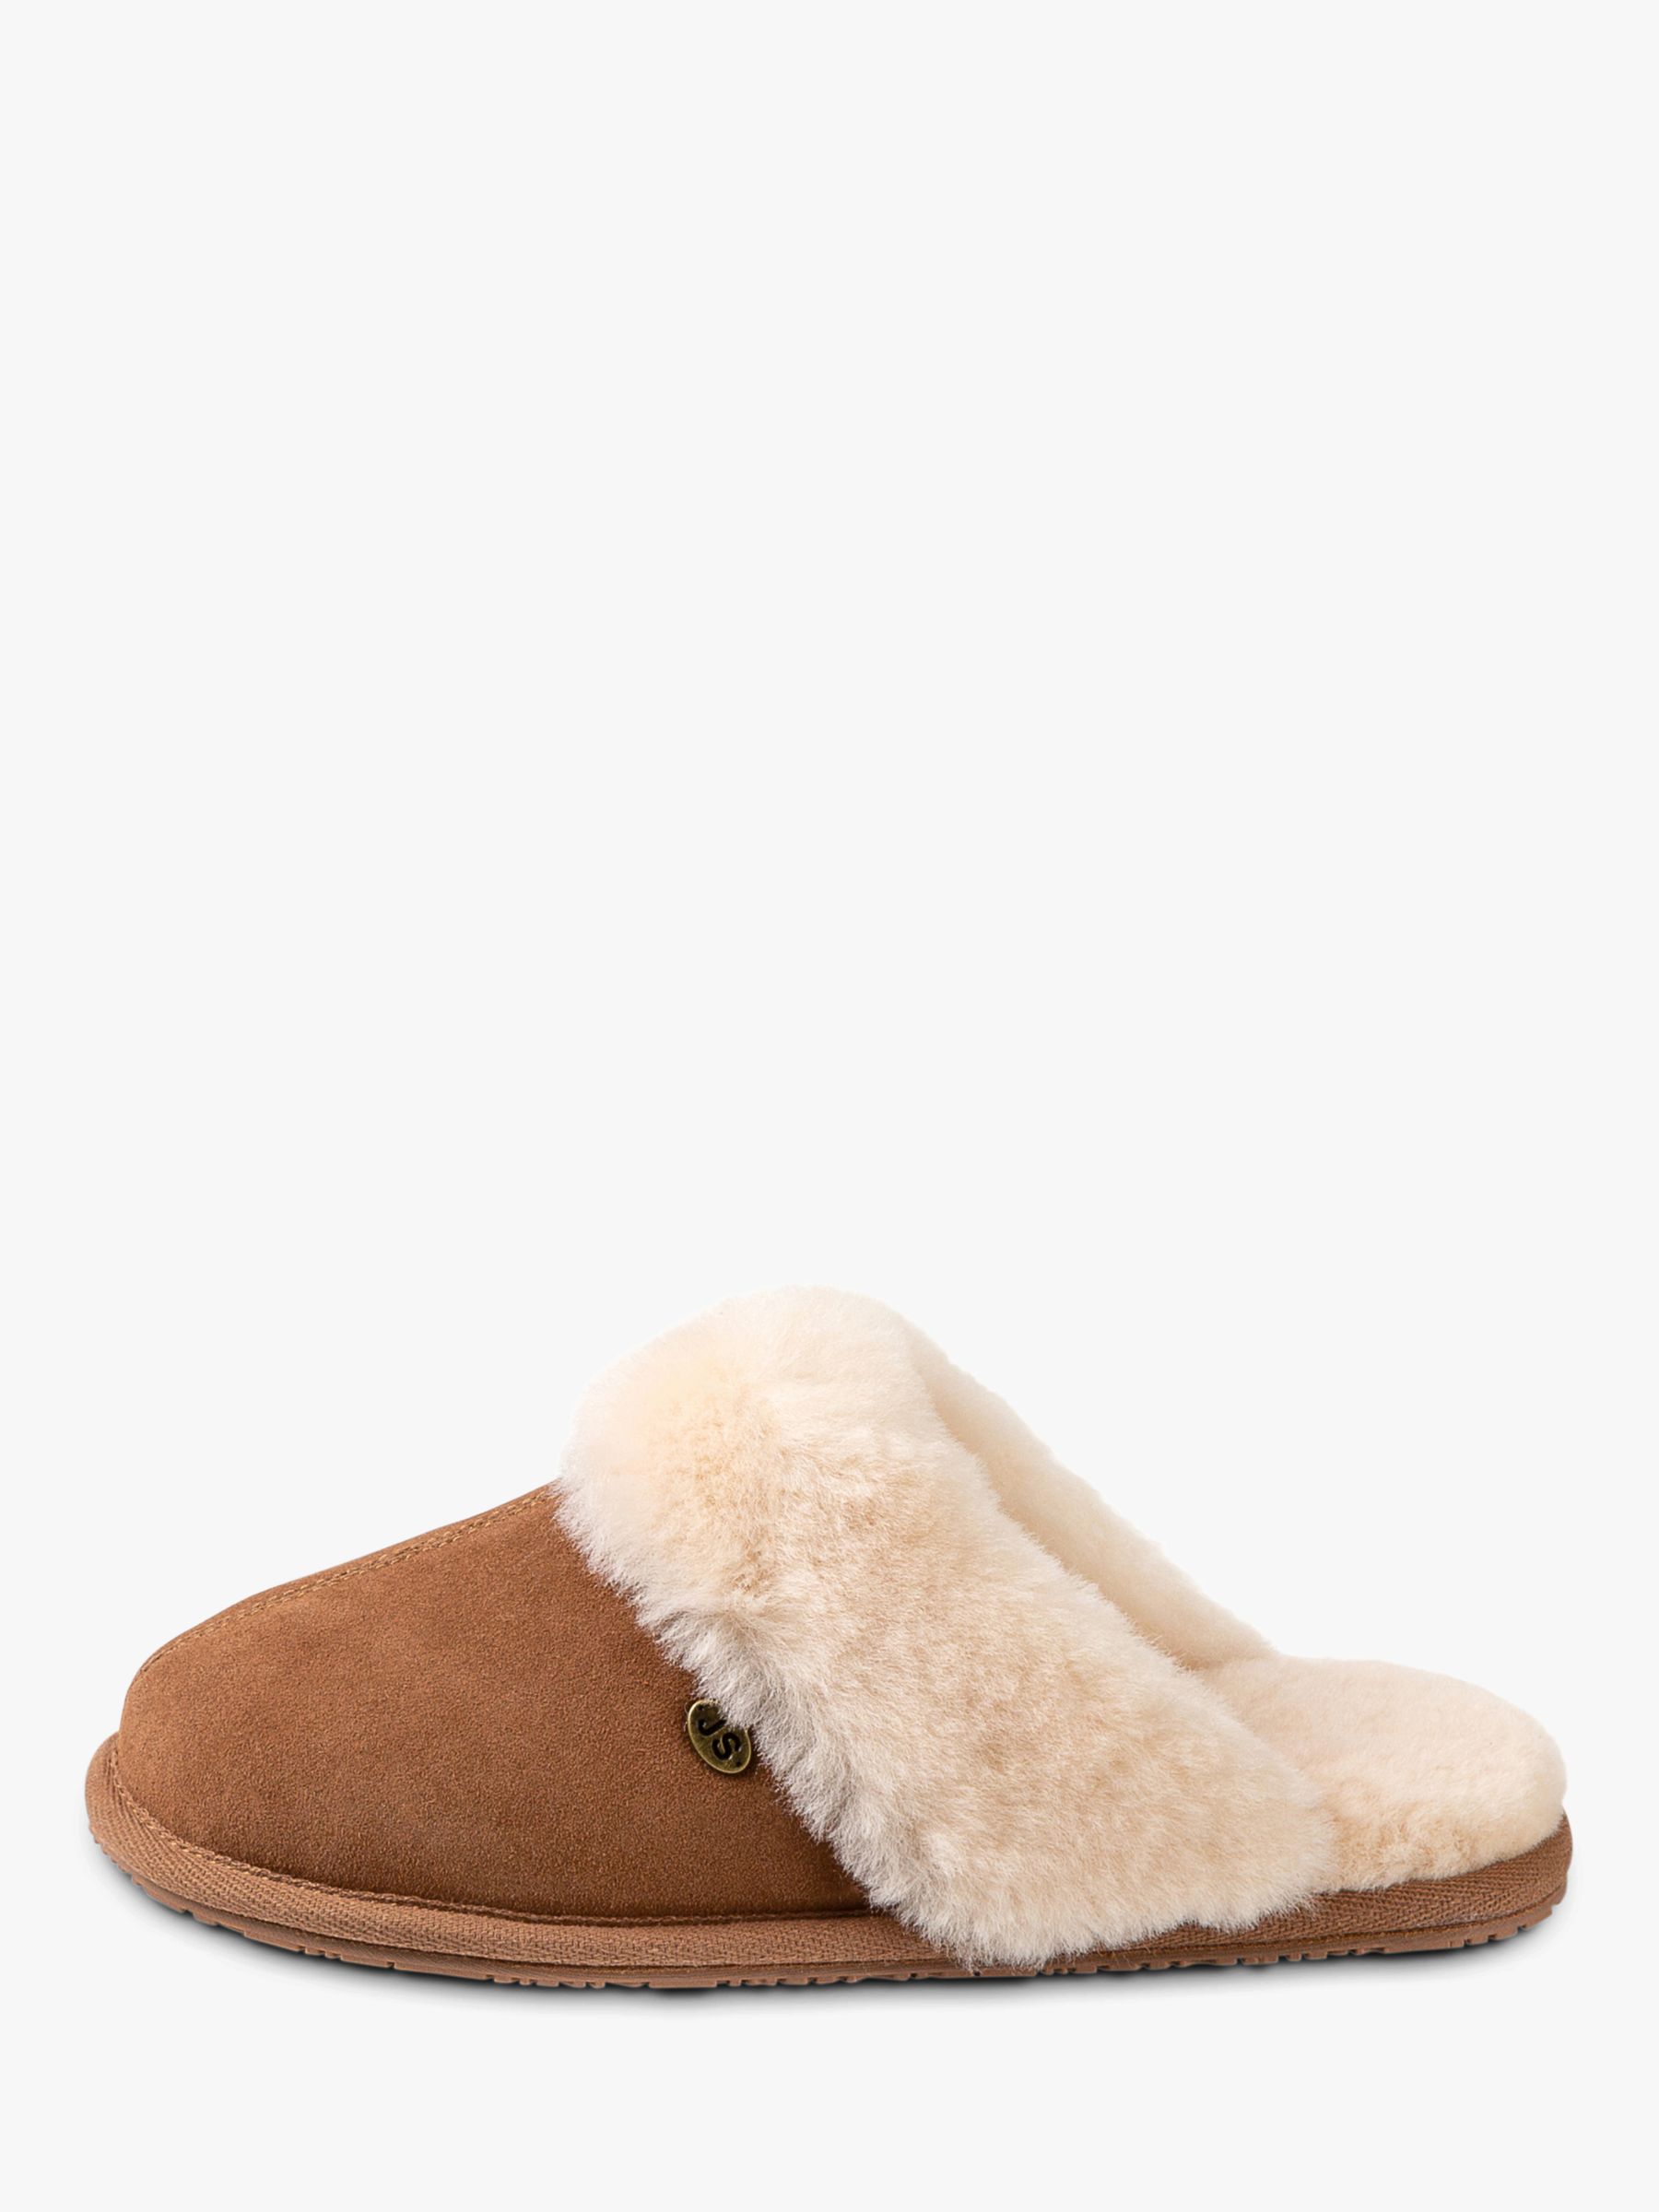 womens slippers uk sale